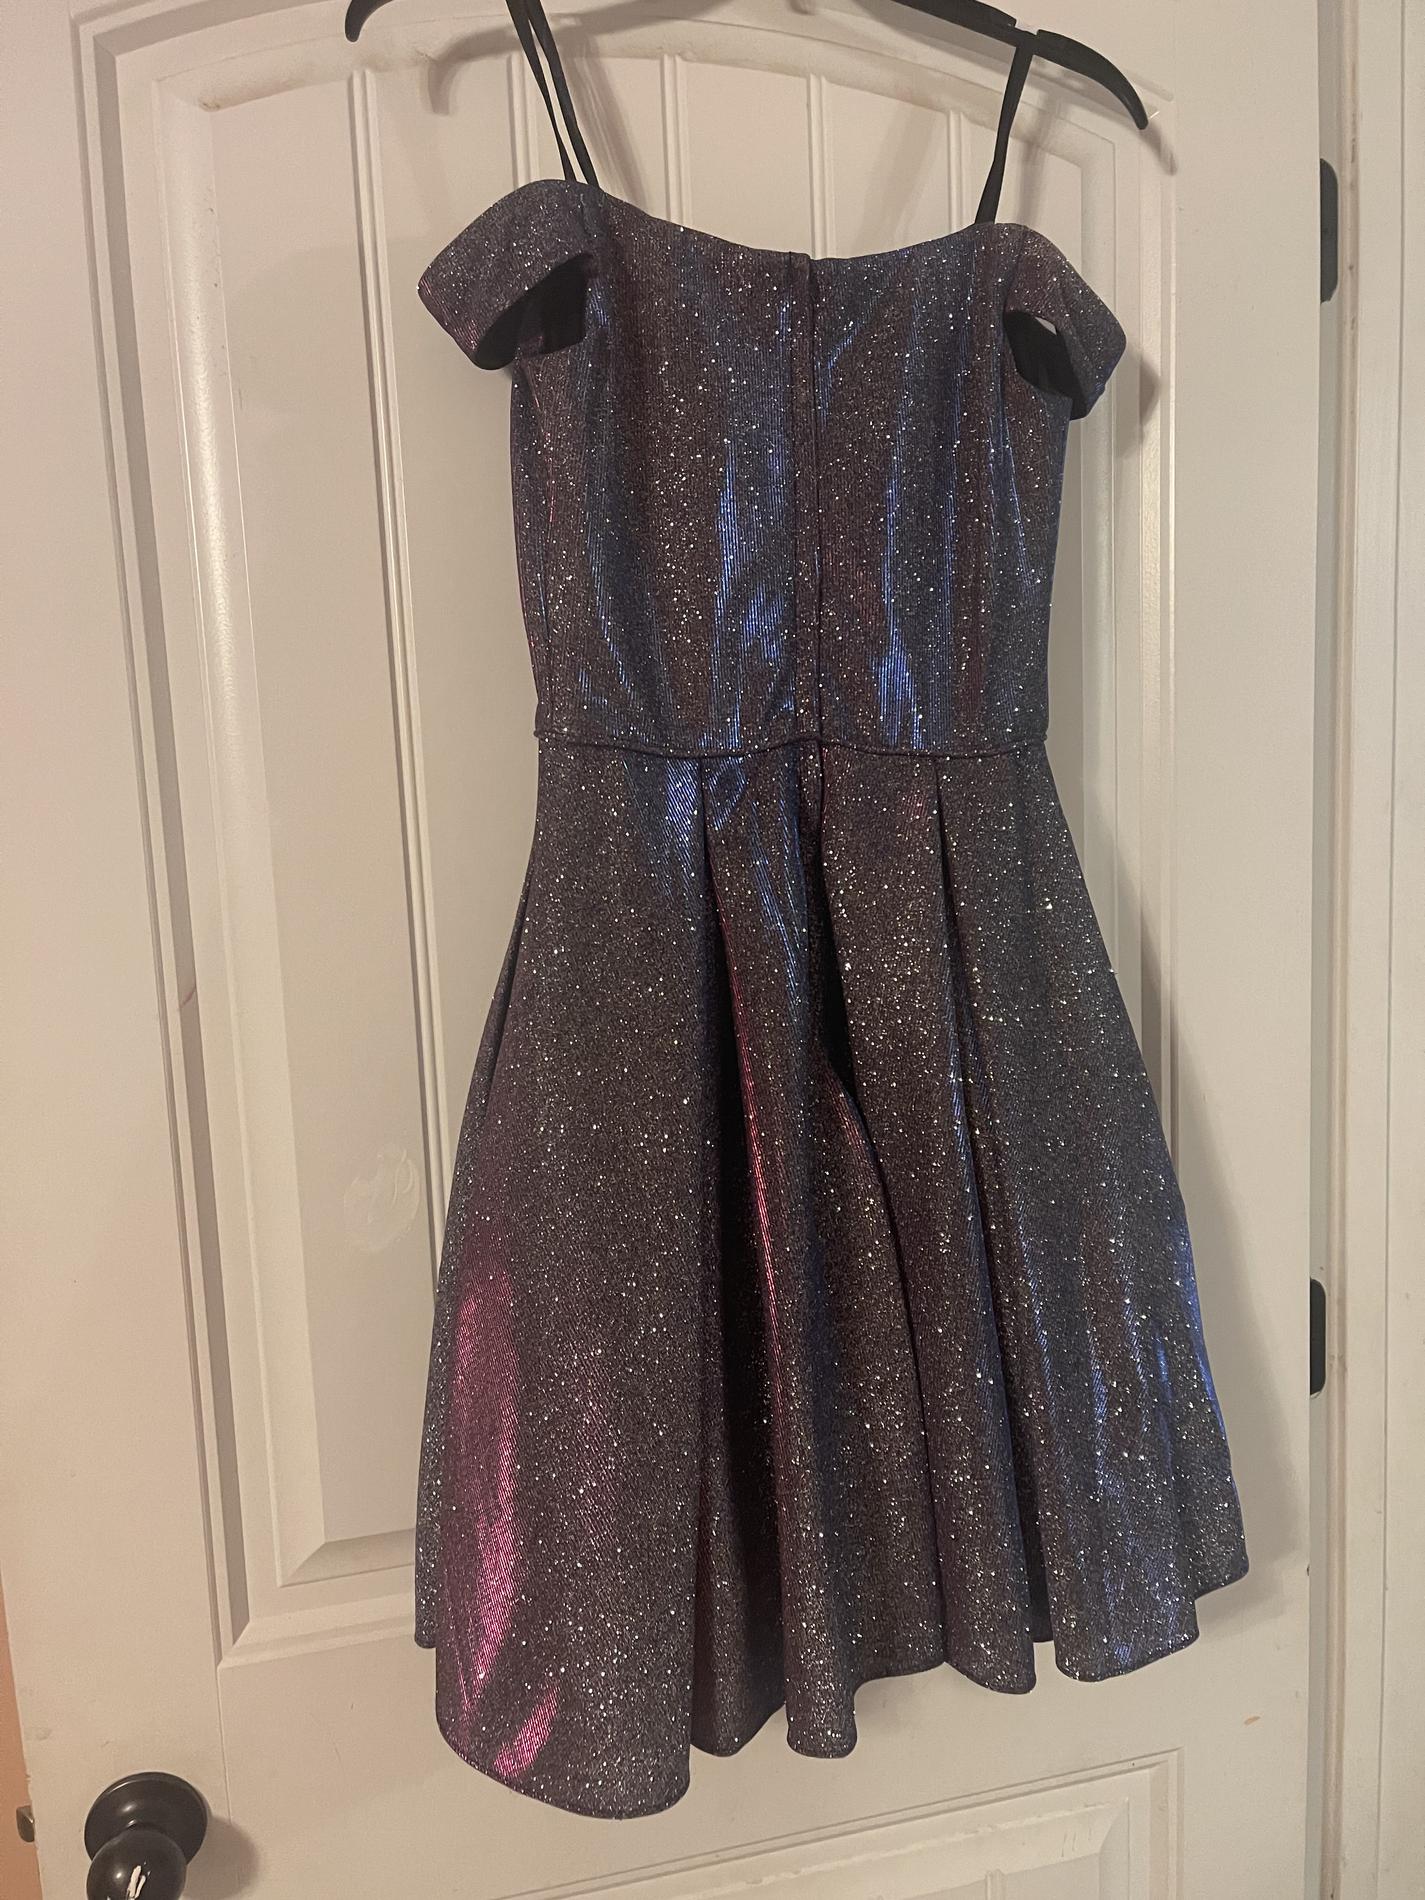 Short Black Sparkly Corset Homecoming Dress – Lisposa